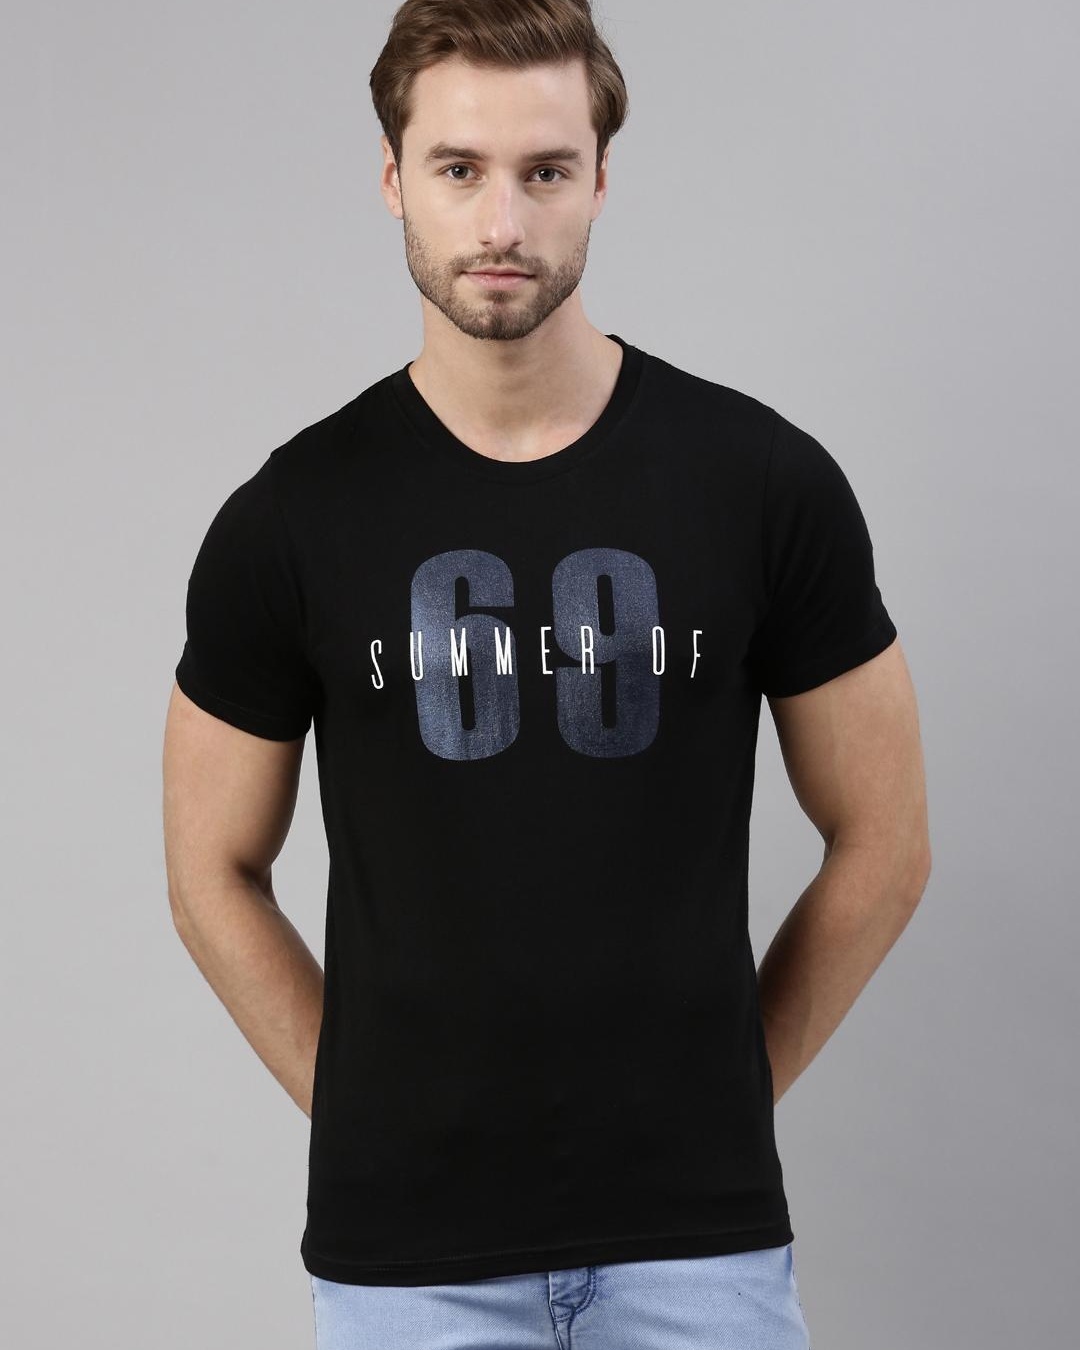 Buy Men's Black 69 Summer Of Typography T-shirt for Men Black Online at ...